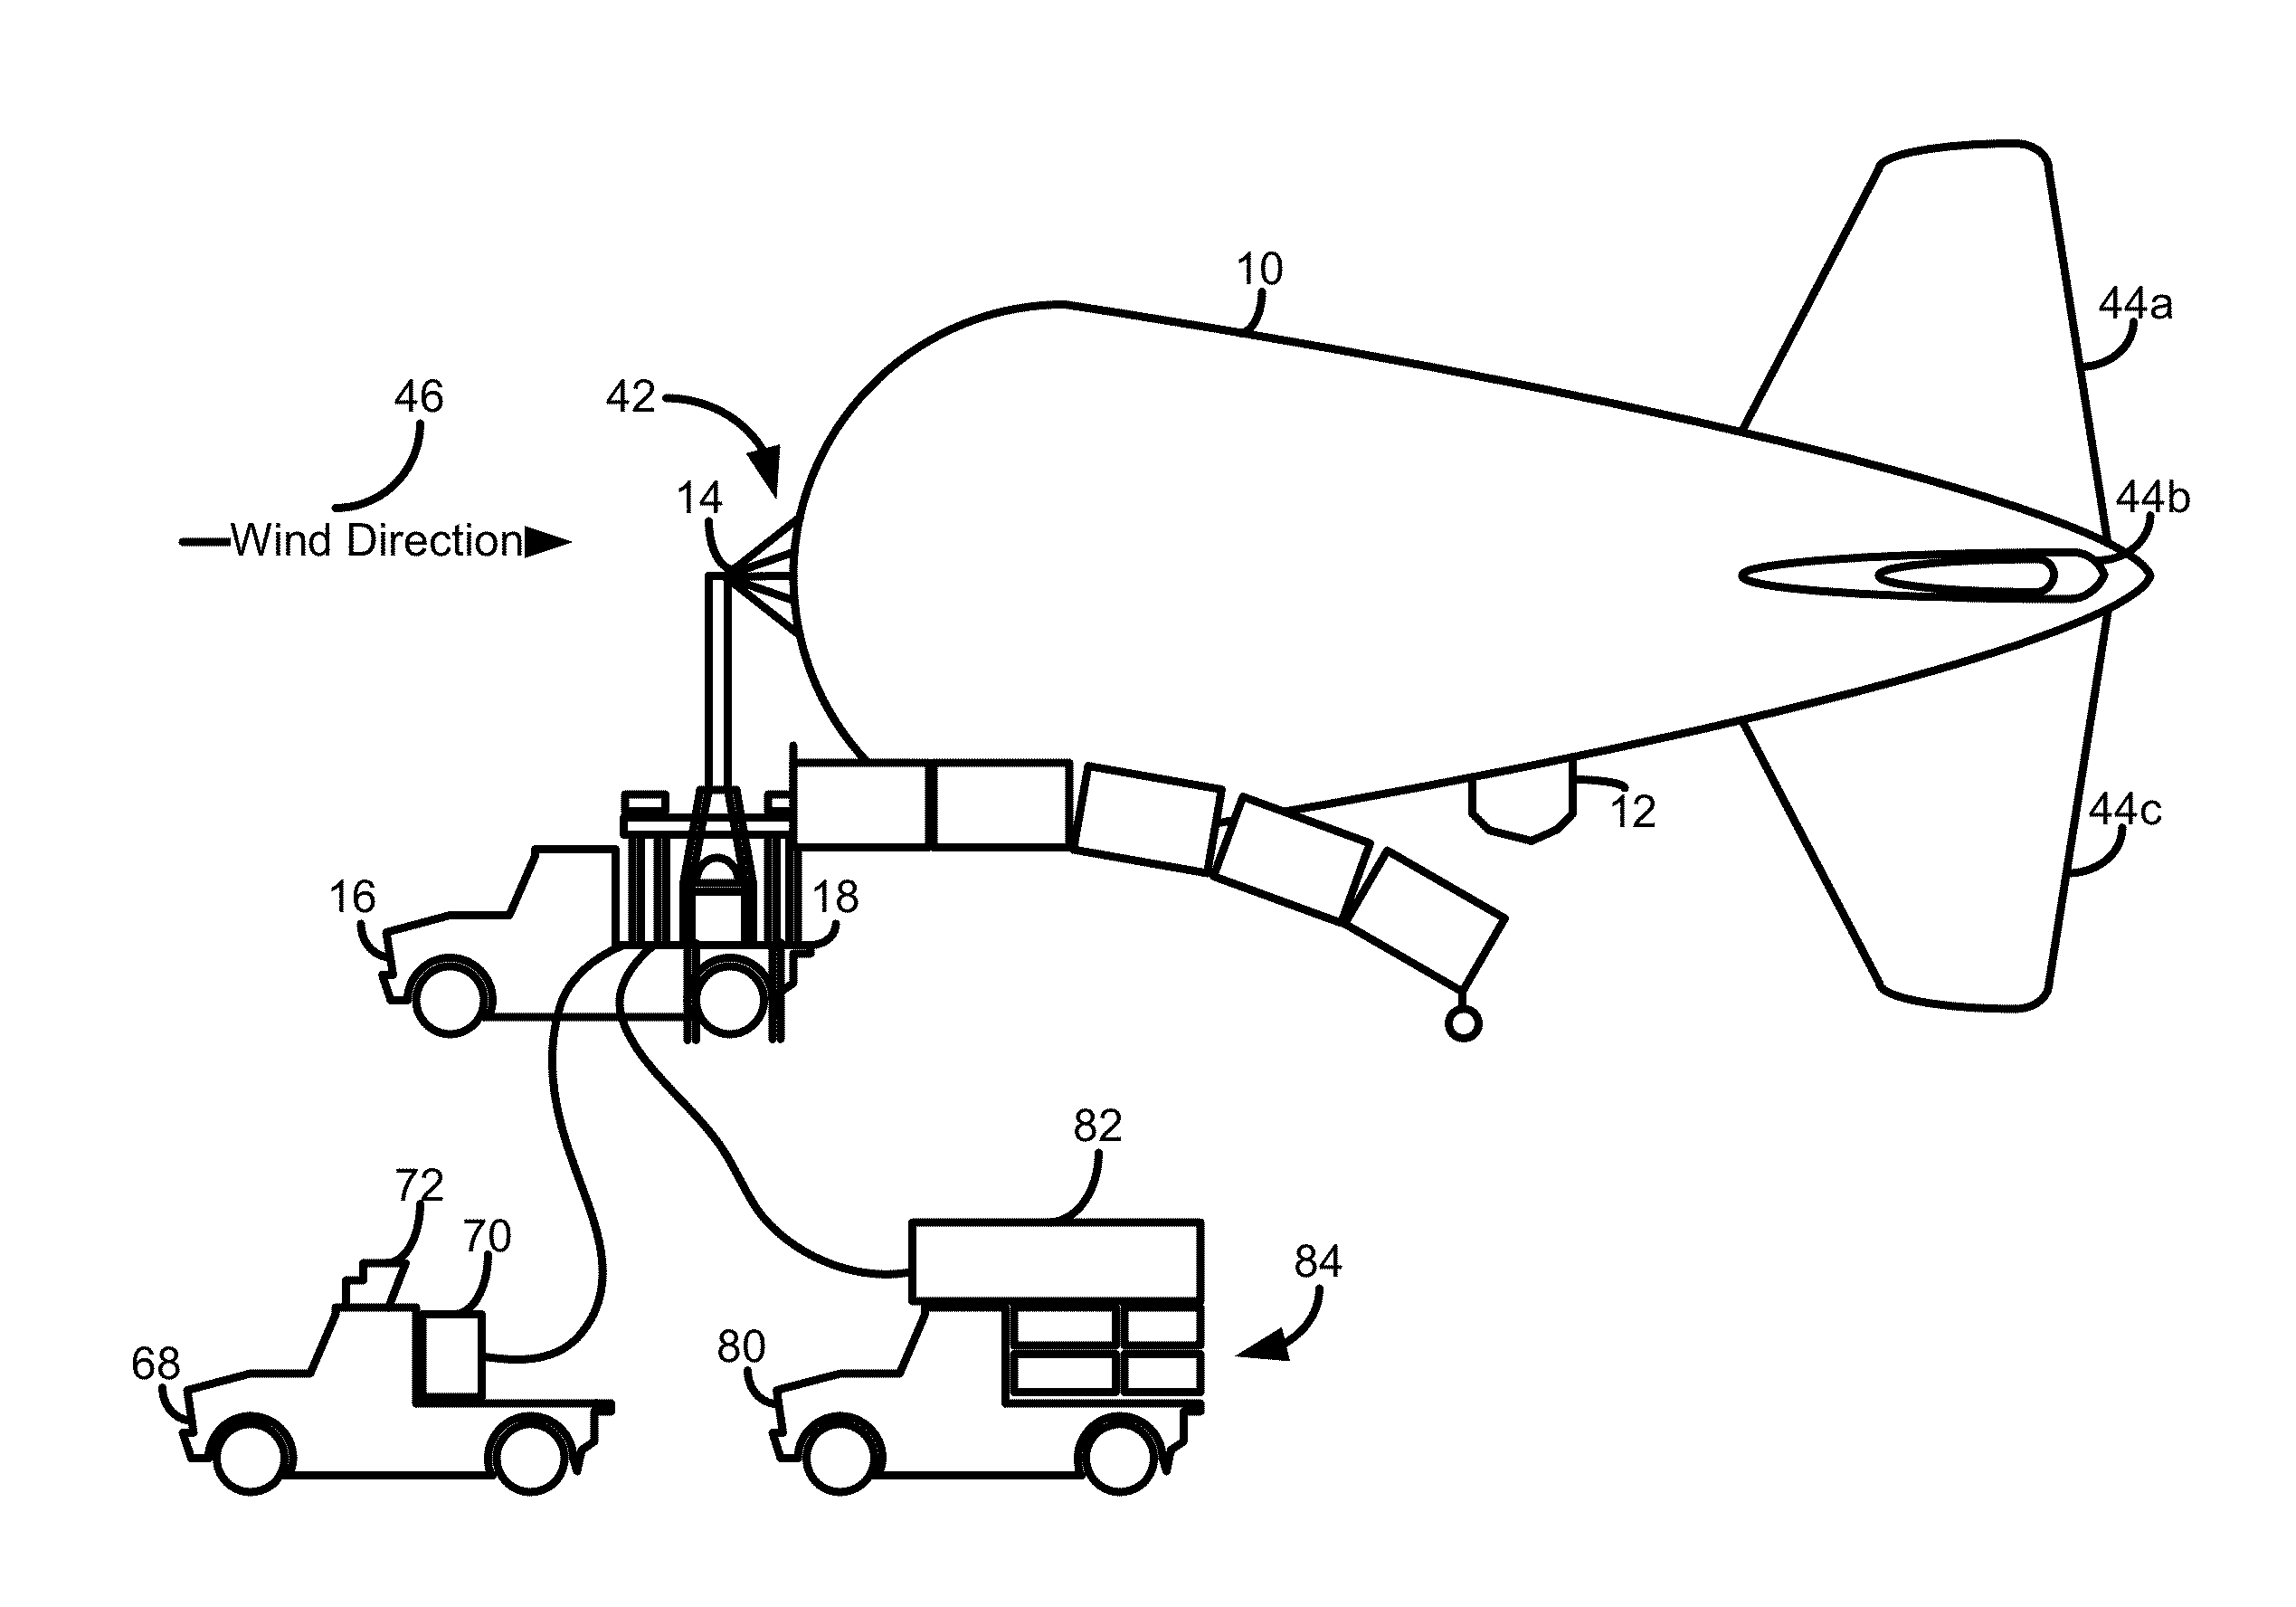 Self Transportable Aerostat System